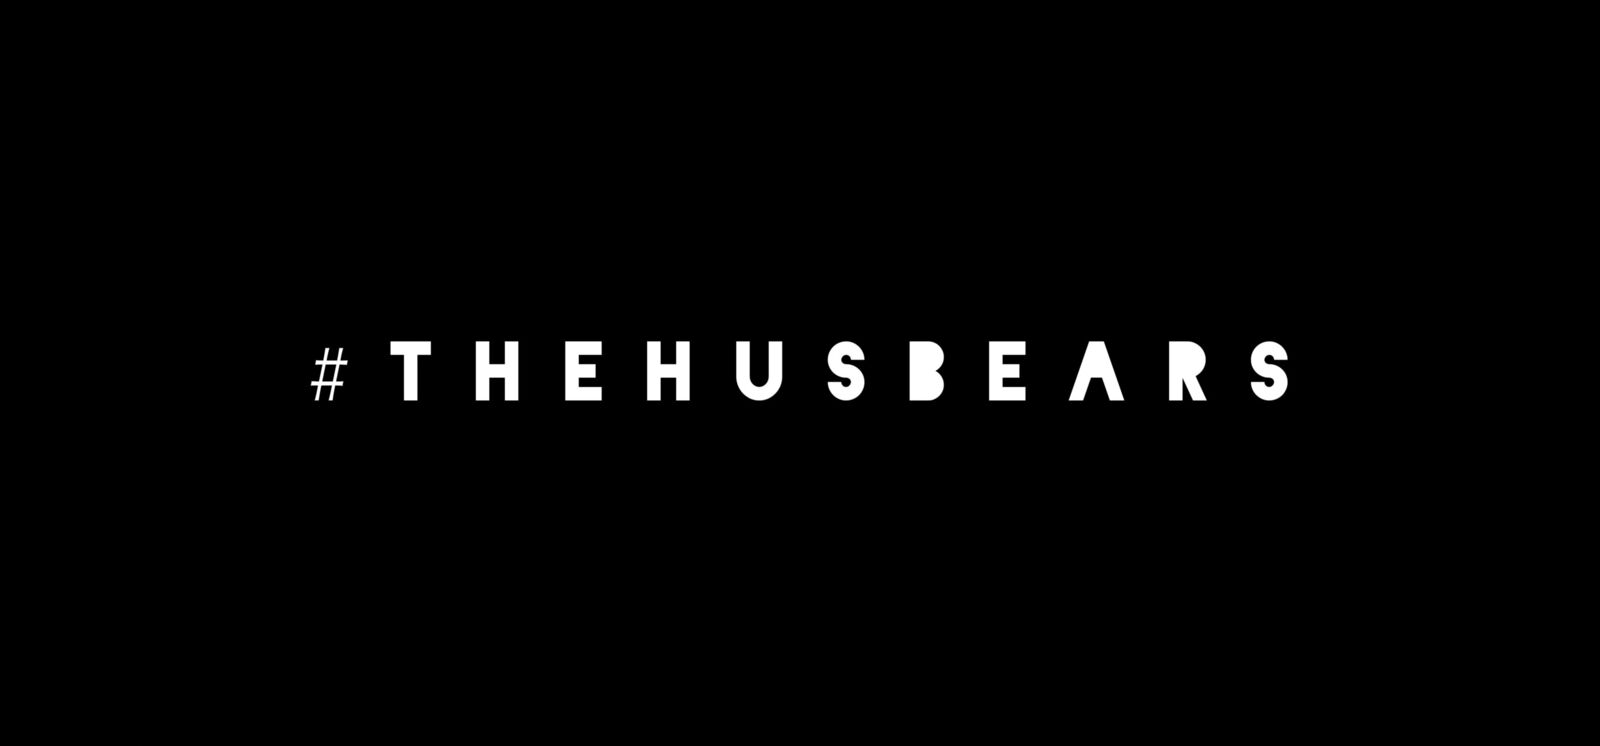 See The Husbears profile